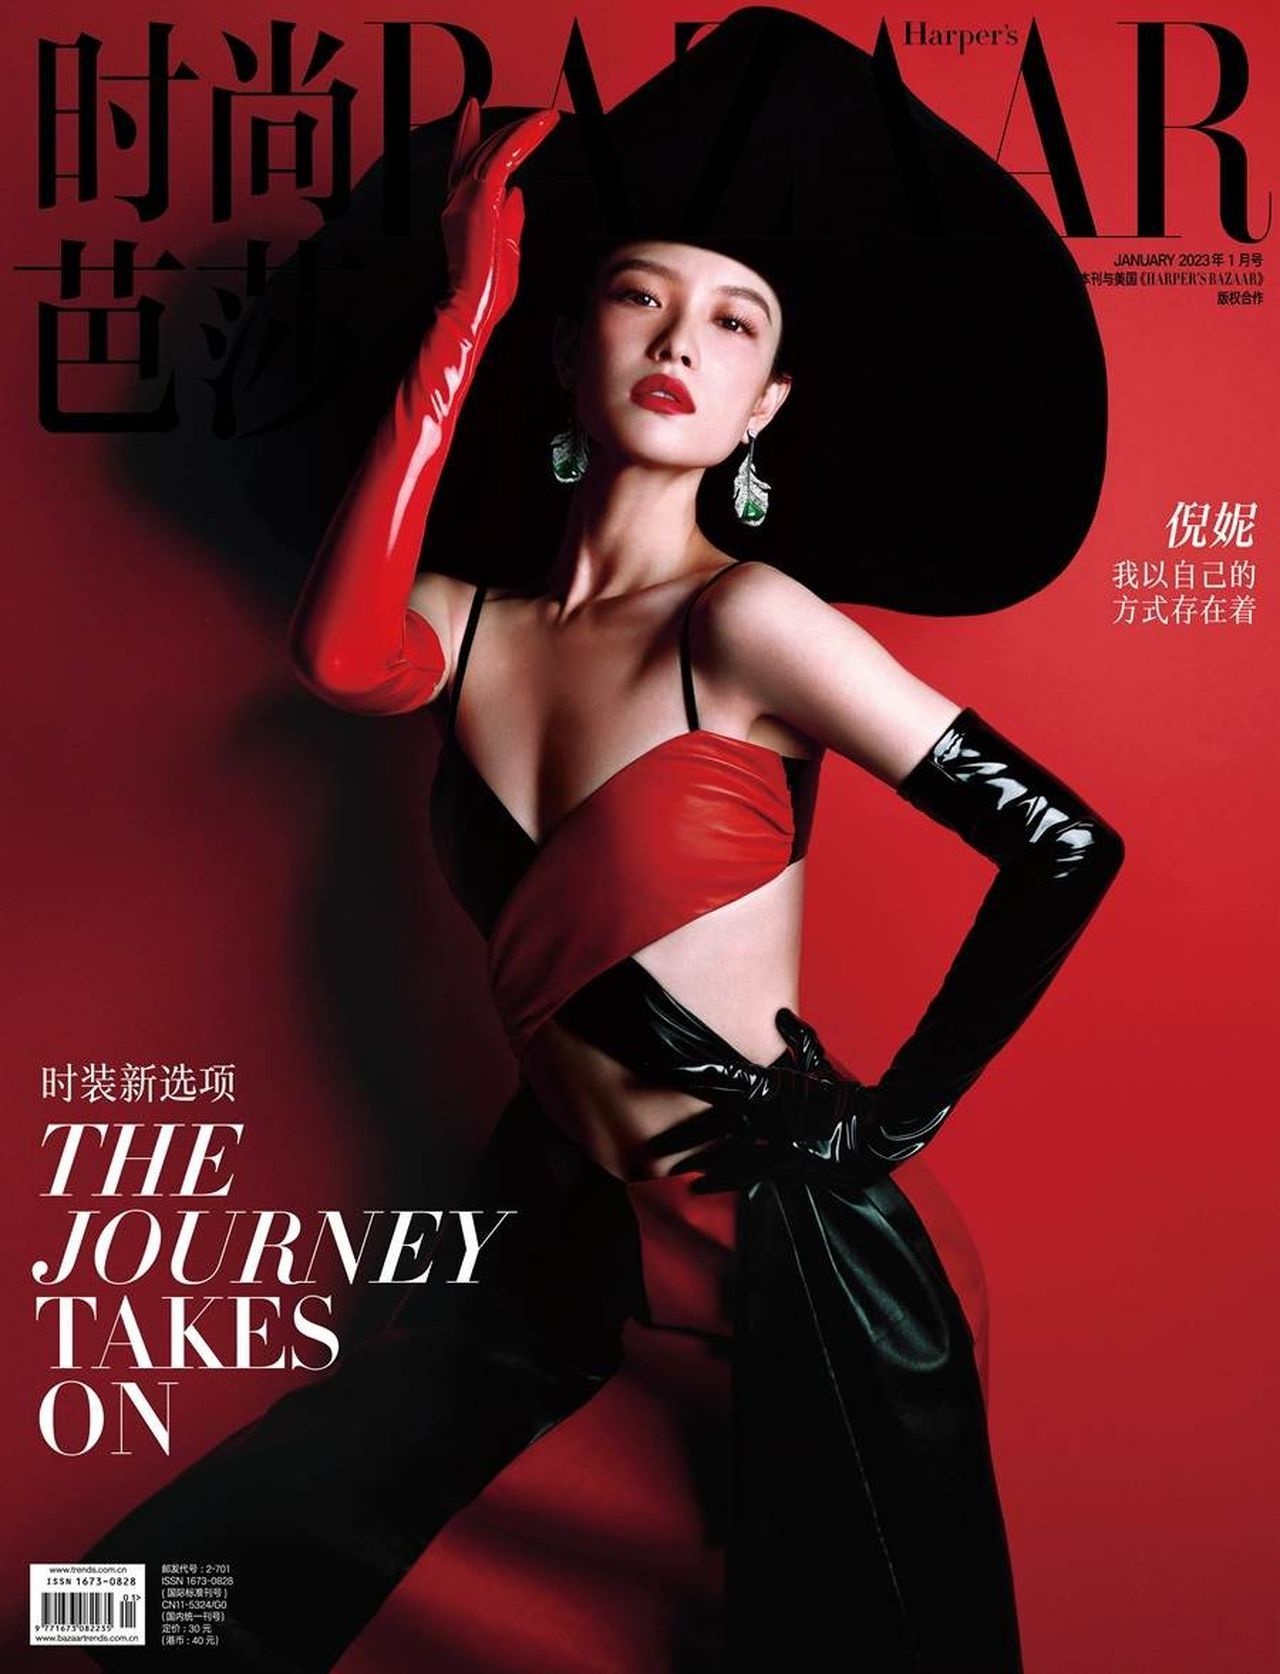 Harper's Bazaar China January 2023 Cover Story Editorial